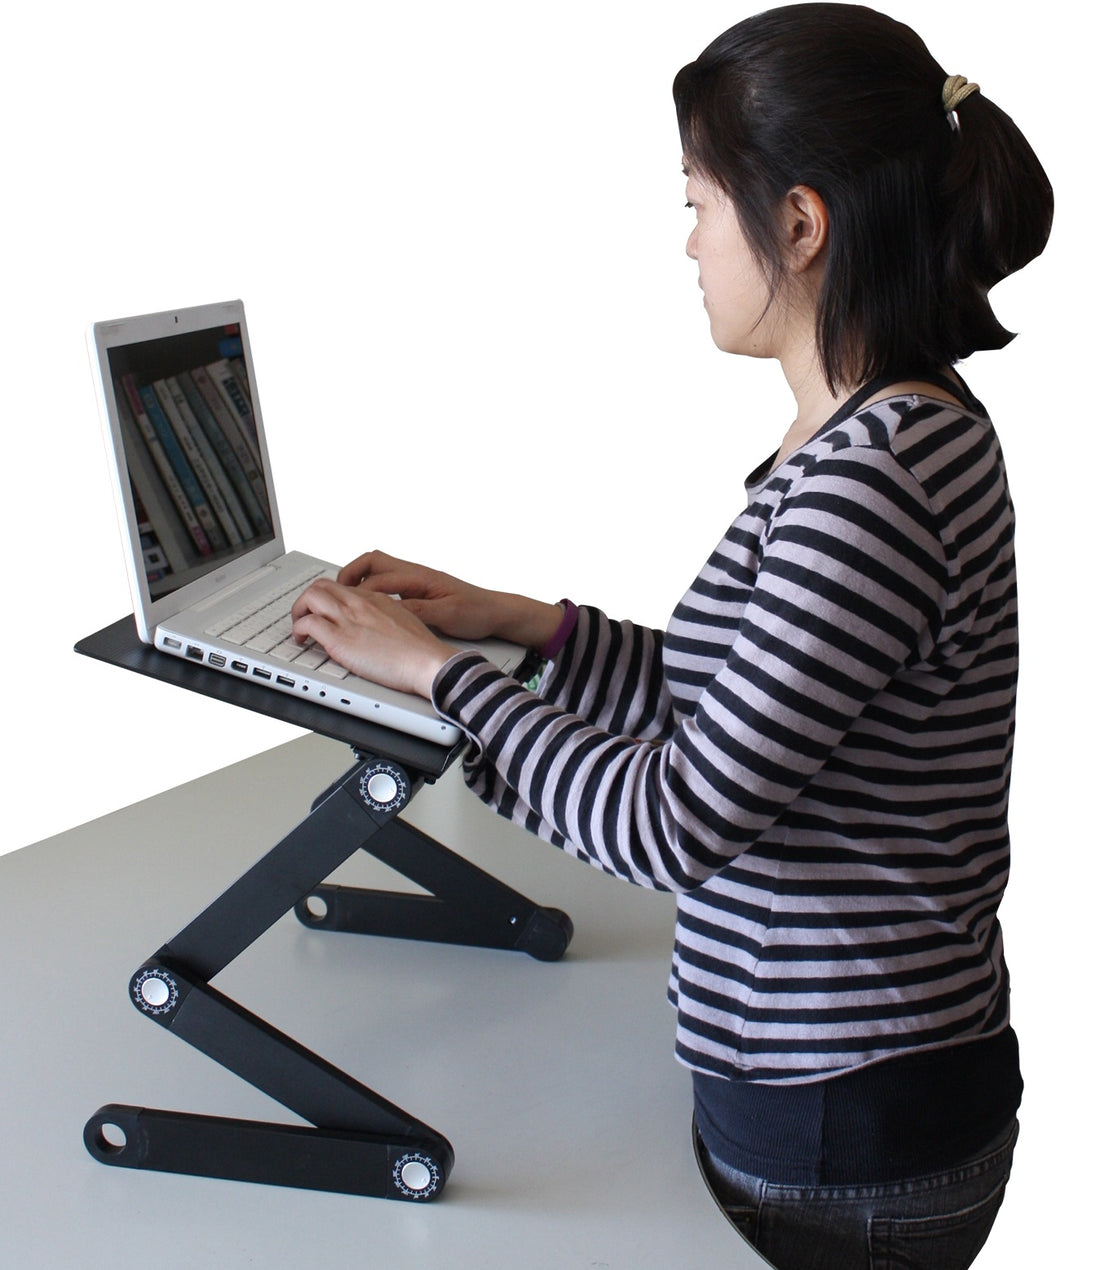 Benefits of Standing vs. Sitting Desk